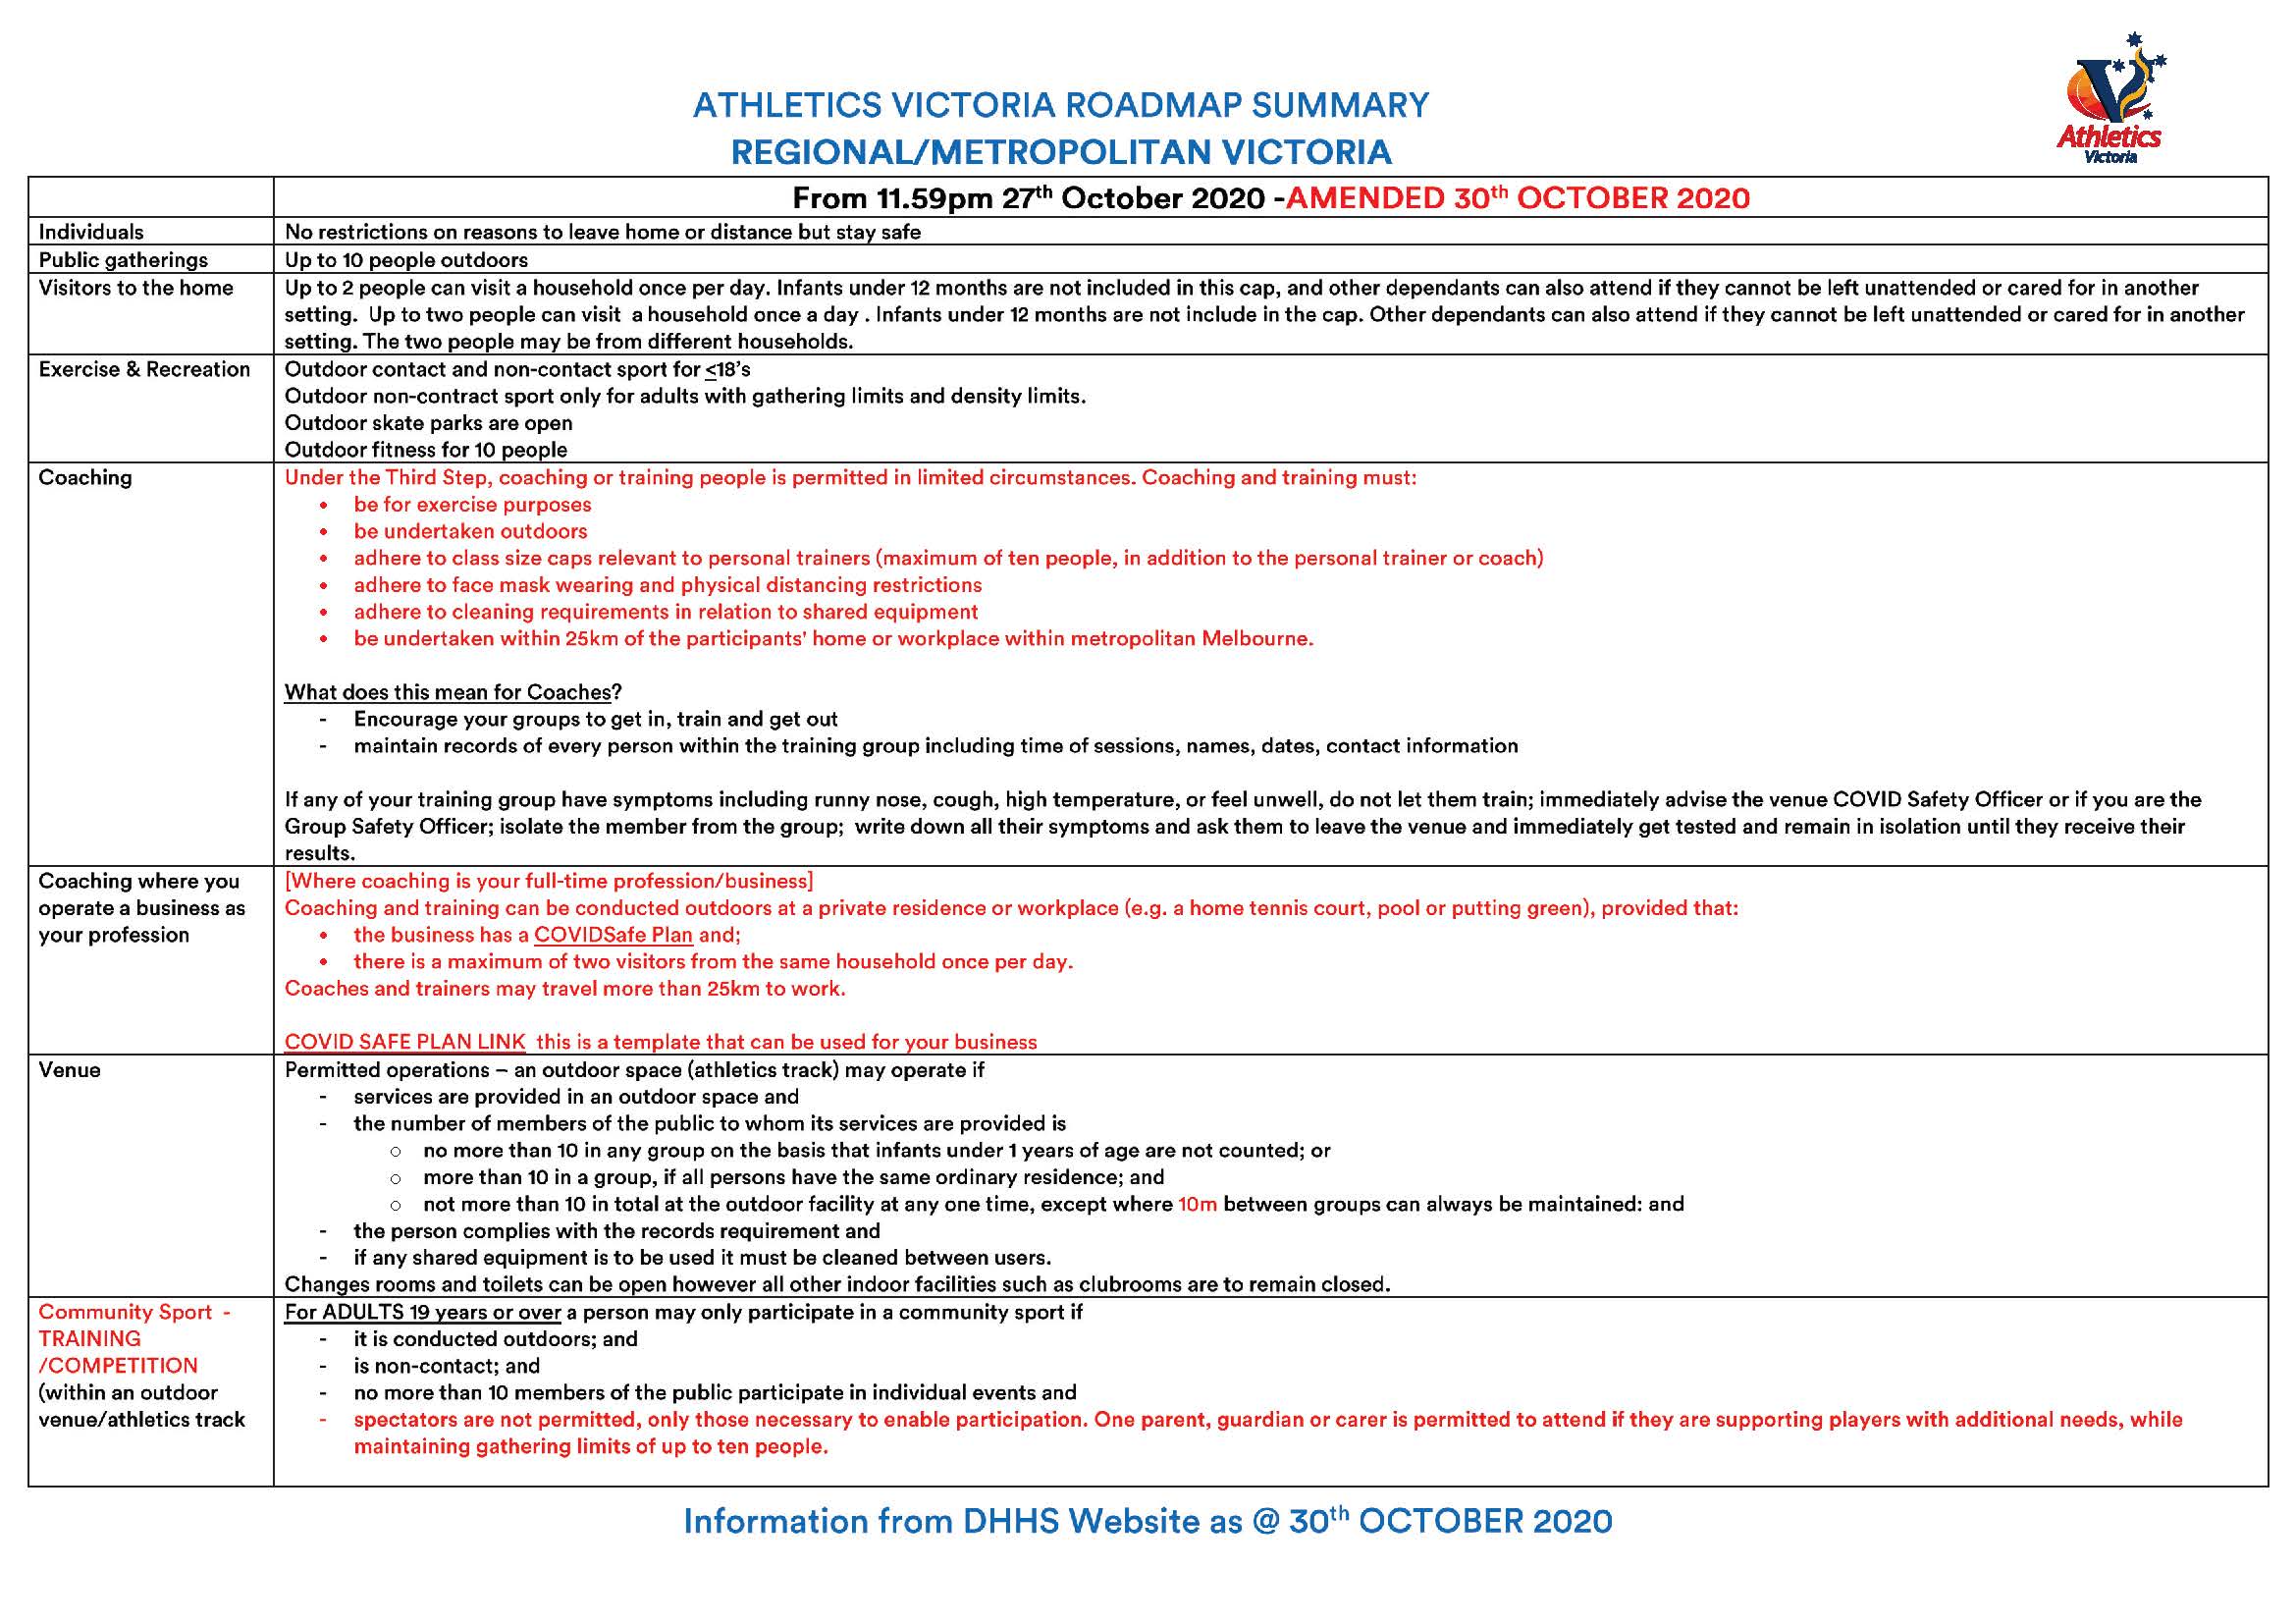 Download Regional Victoria Restrictions Roadmap Images